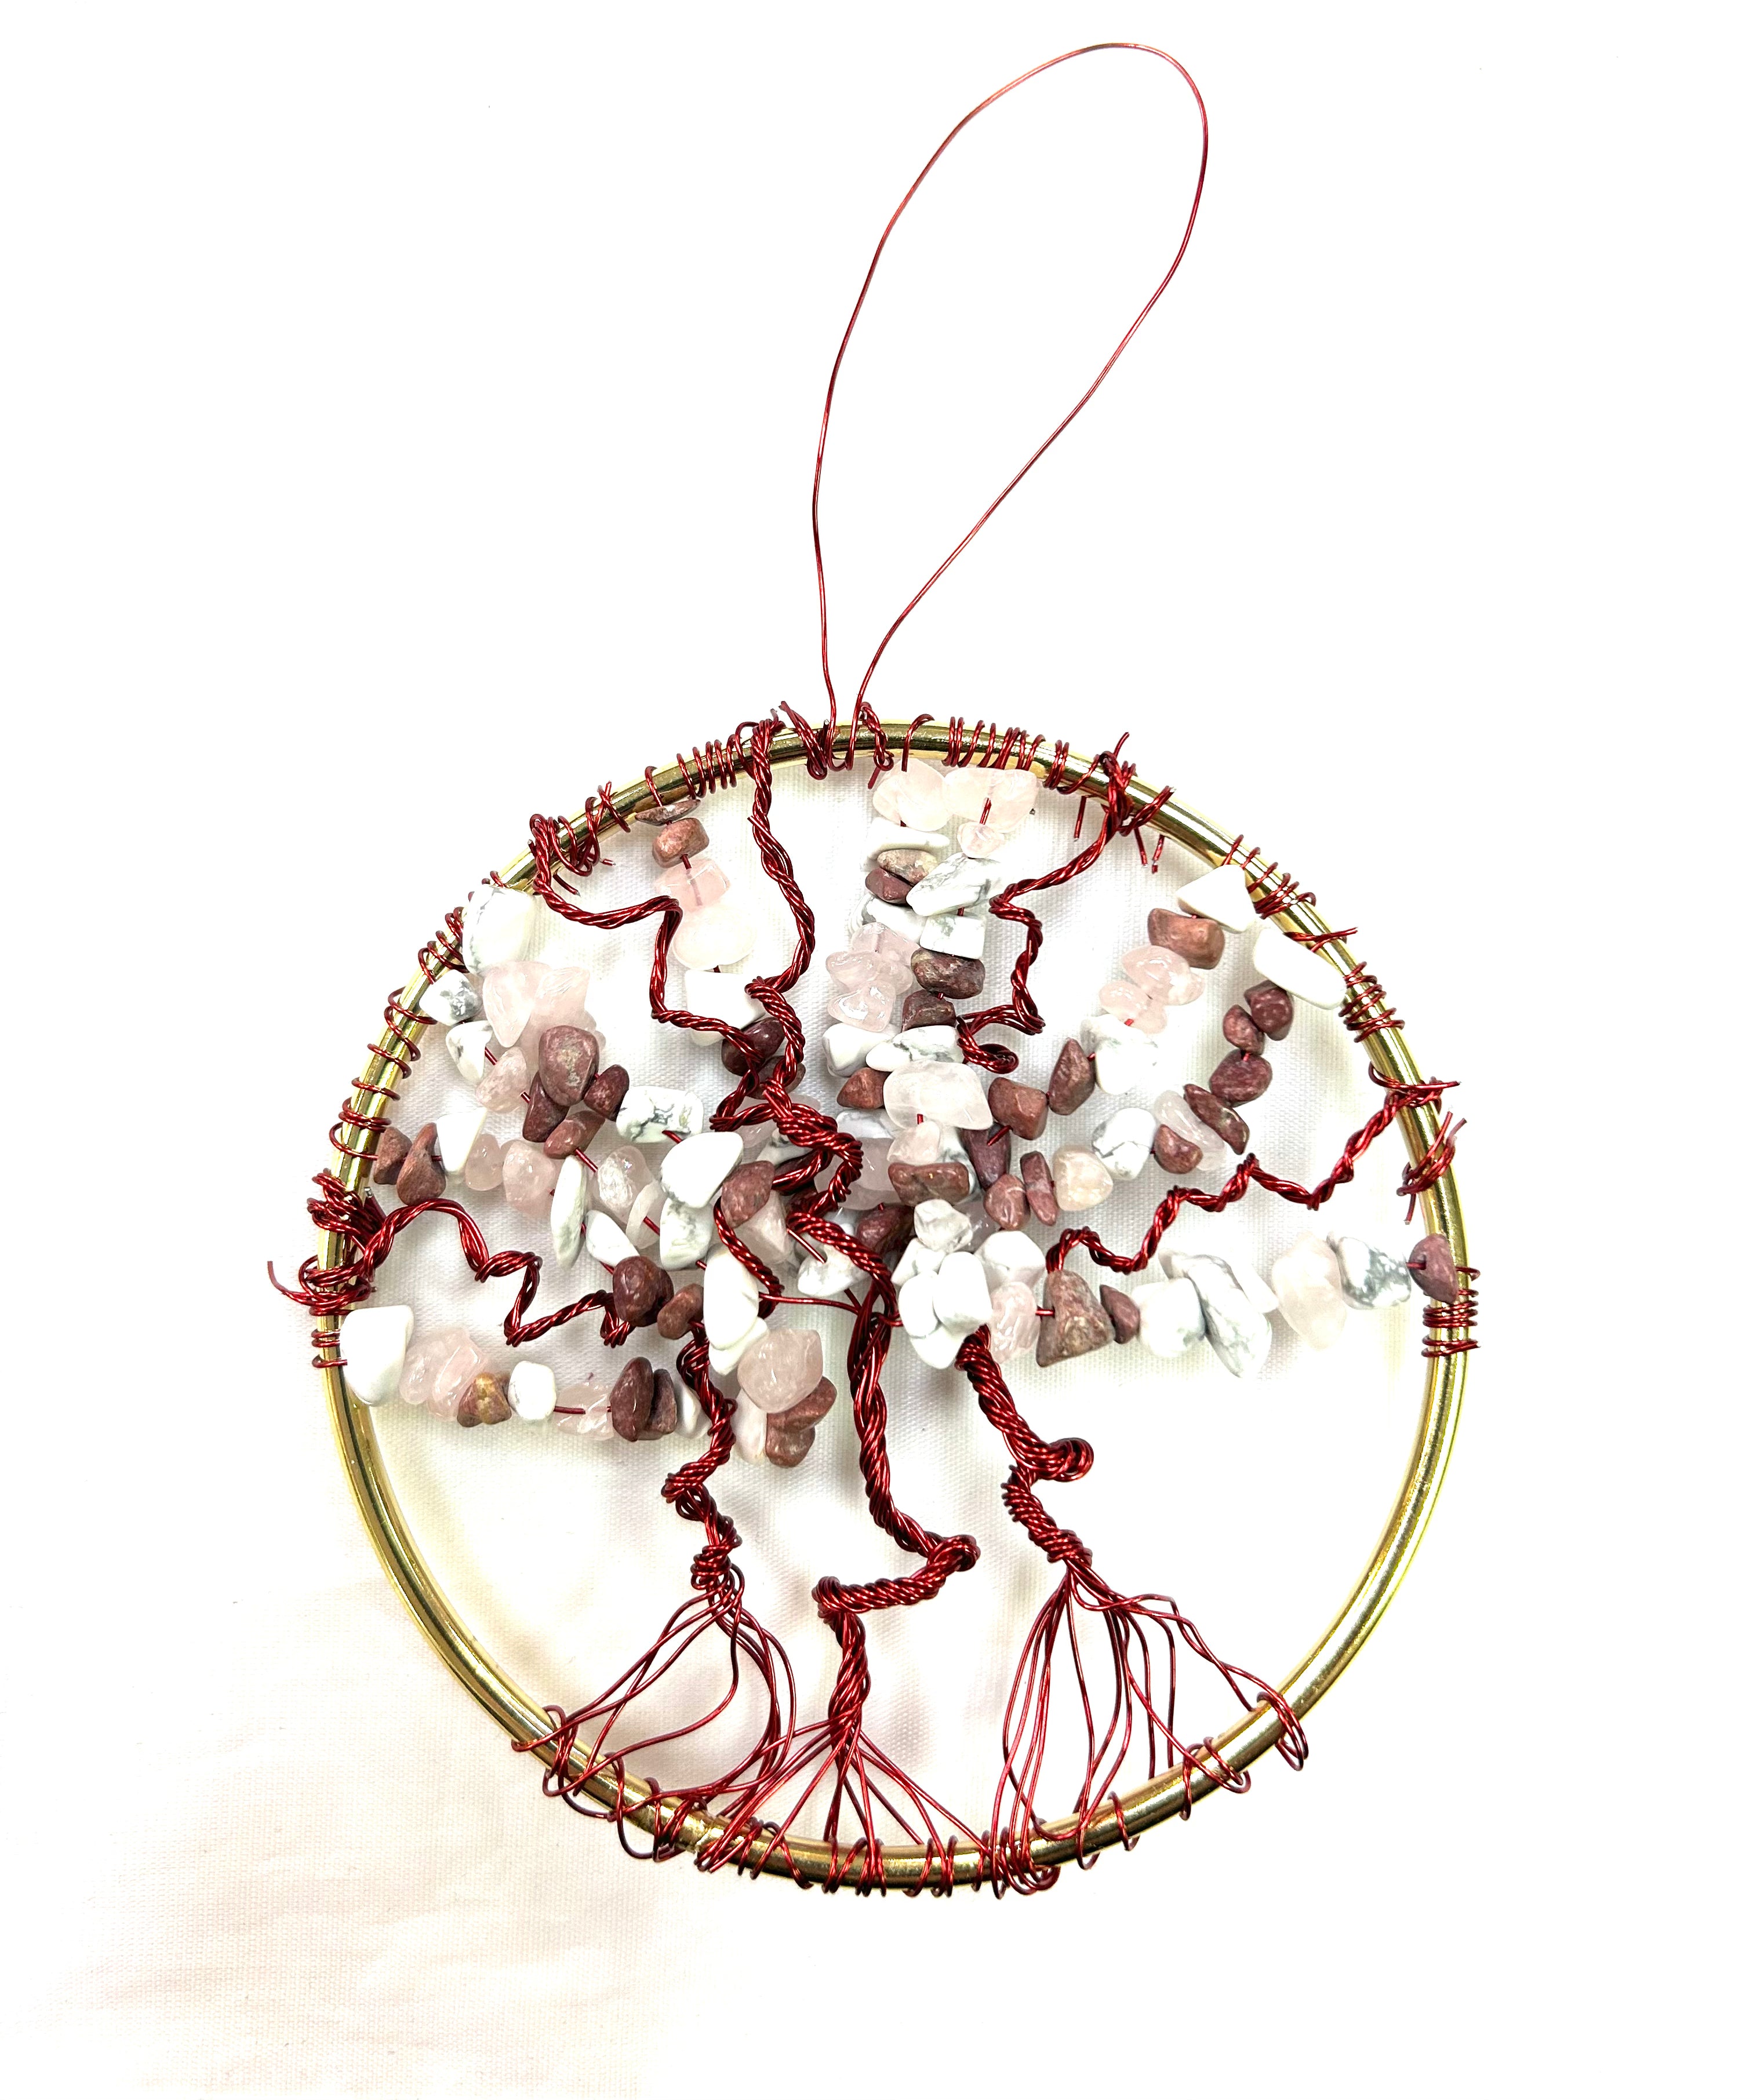 Tree of Life Ornament - Lighten Up Shop